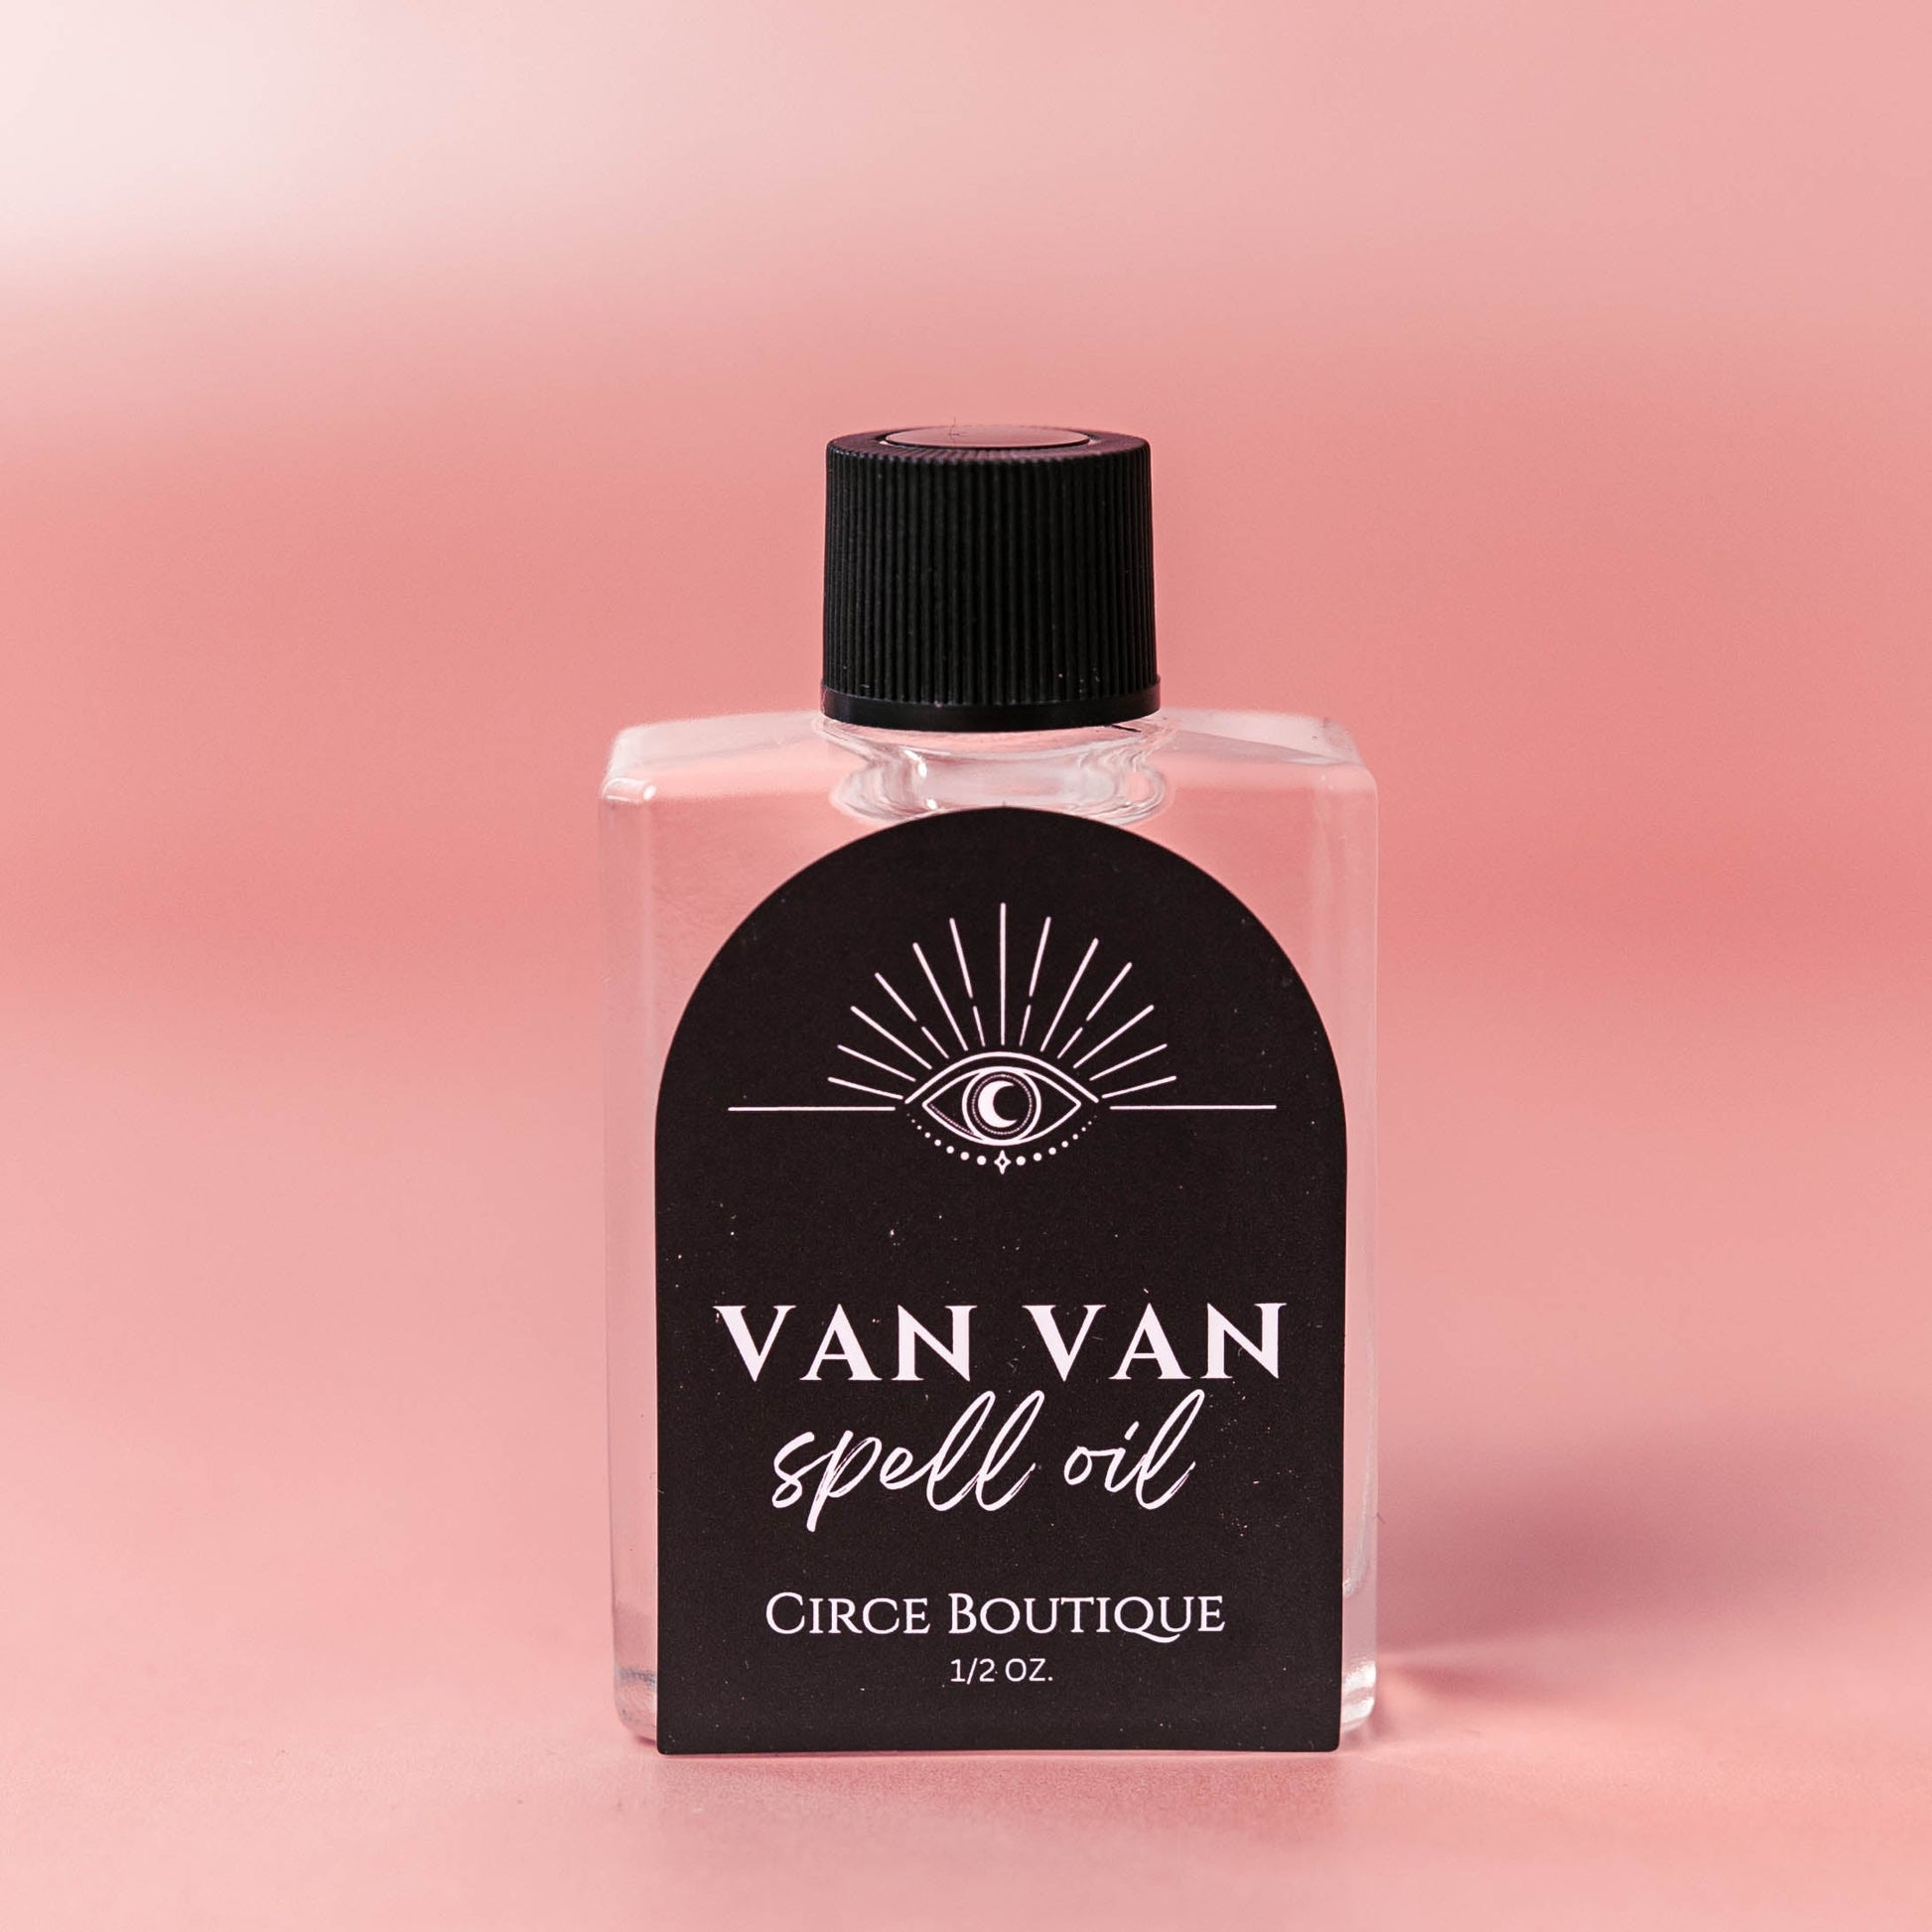 CIRCE Van Van Spell Oil 1/2 oz. - Oil  from CirceBoutique